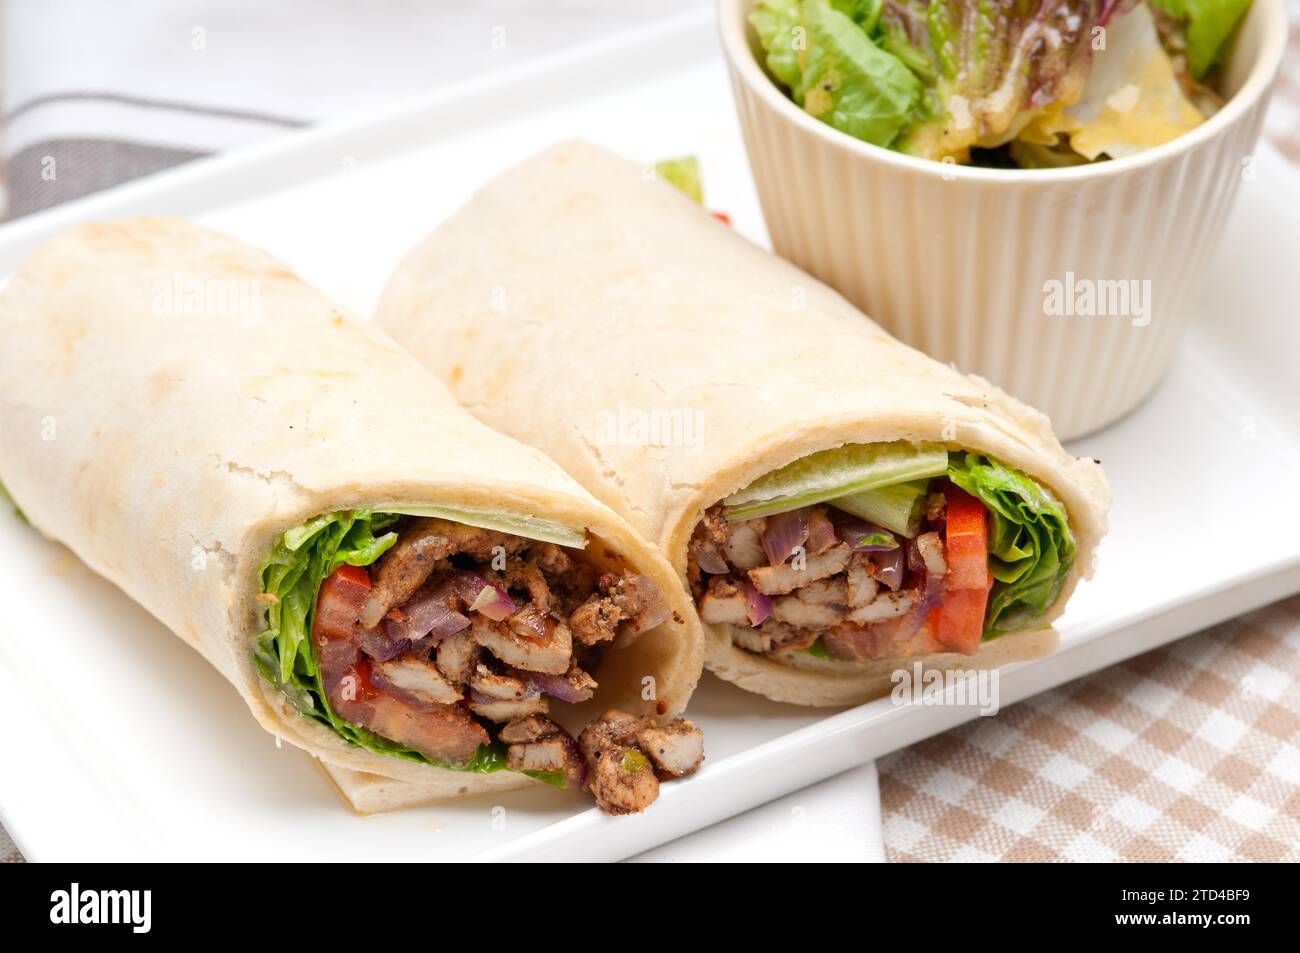 Kafta shawarma chicken pita wrap roll sandwich traditional arab mid east food, food photography Stock Photo